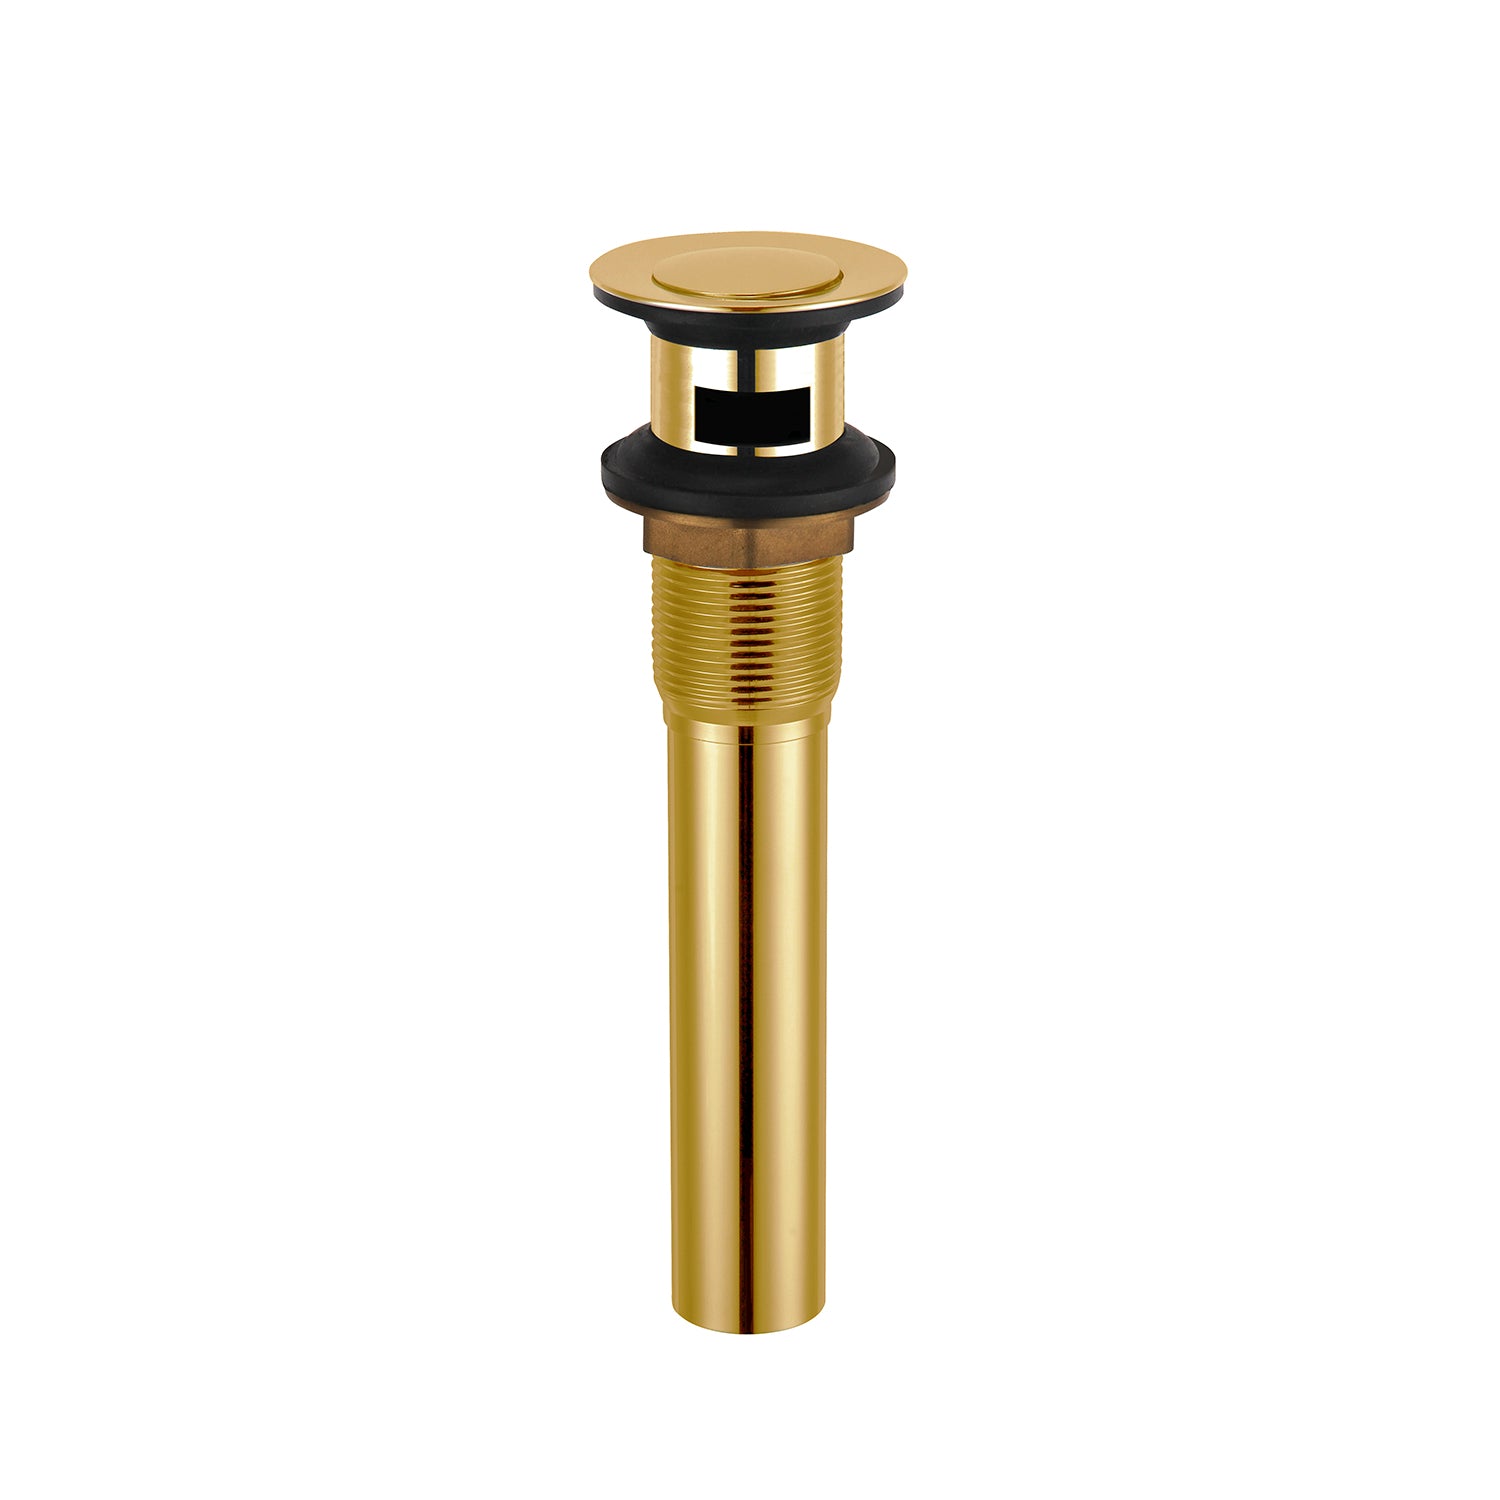 DAX Round Vanity Sink Pop up Drain with Overflow - Brushed Gold (DAX-82019-BG)